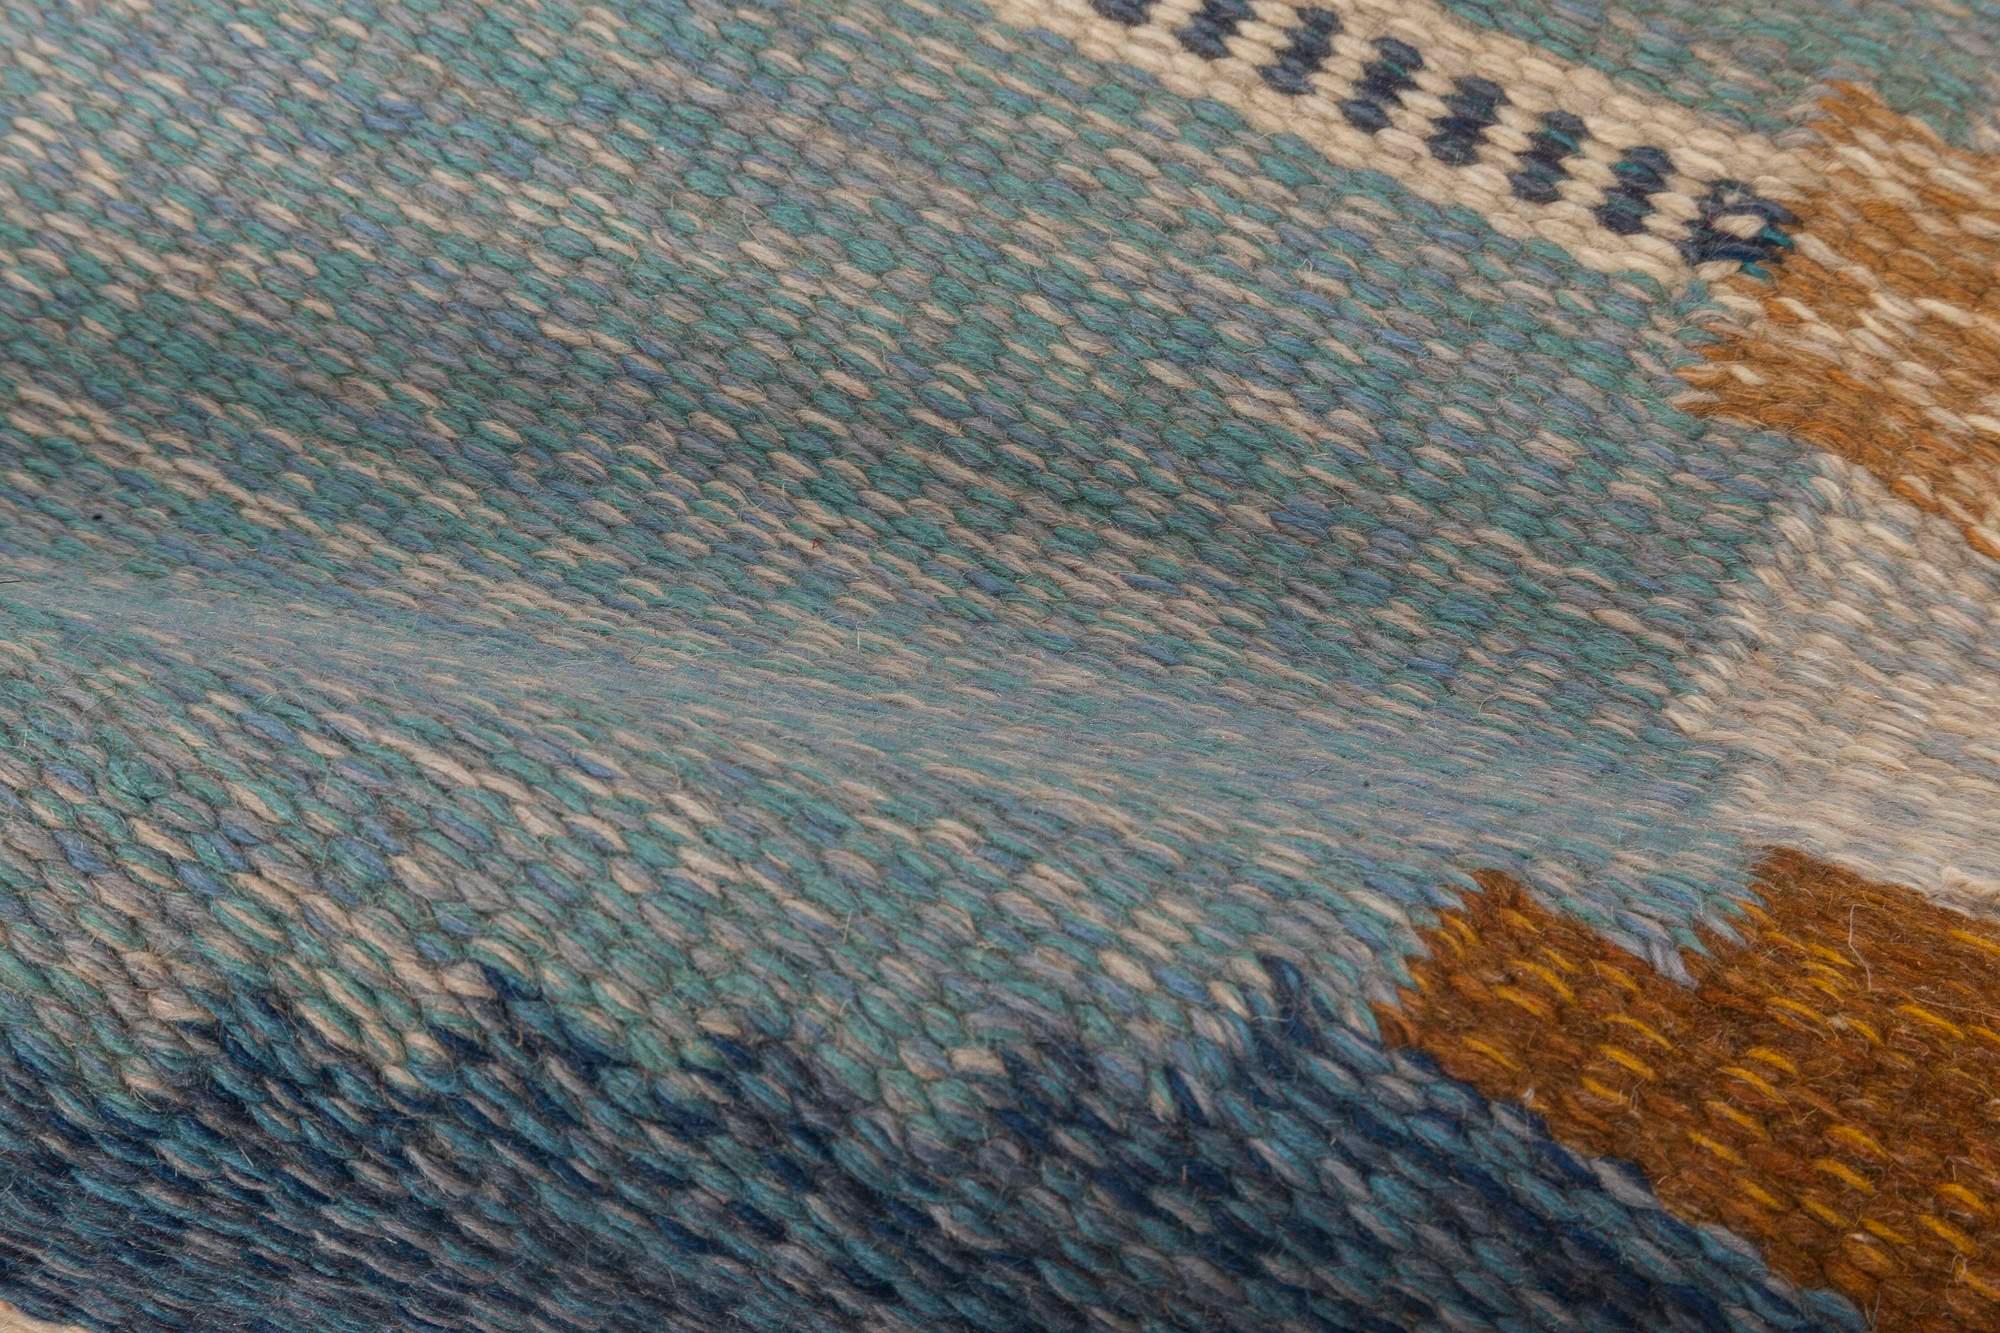 Vintage Swedish flat-weave rug signed by Ingegerd Silow
Size: 5'9